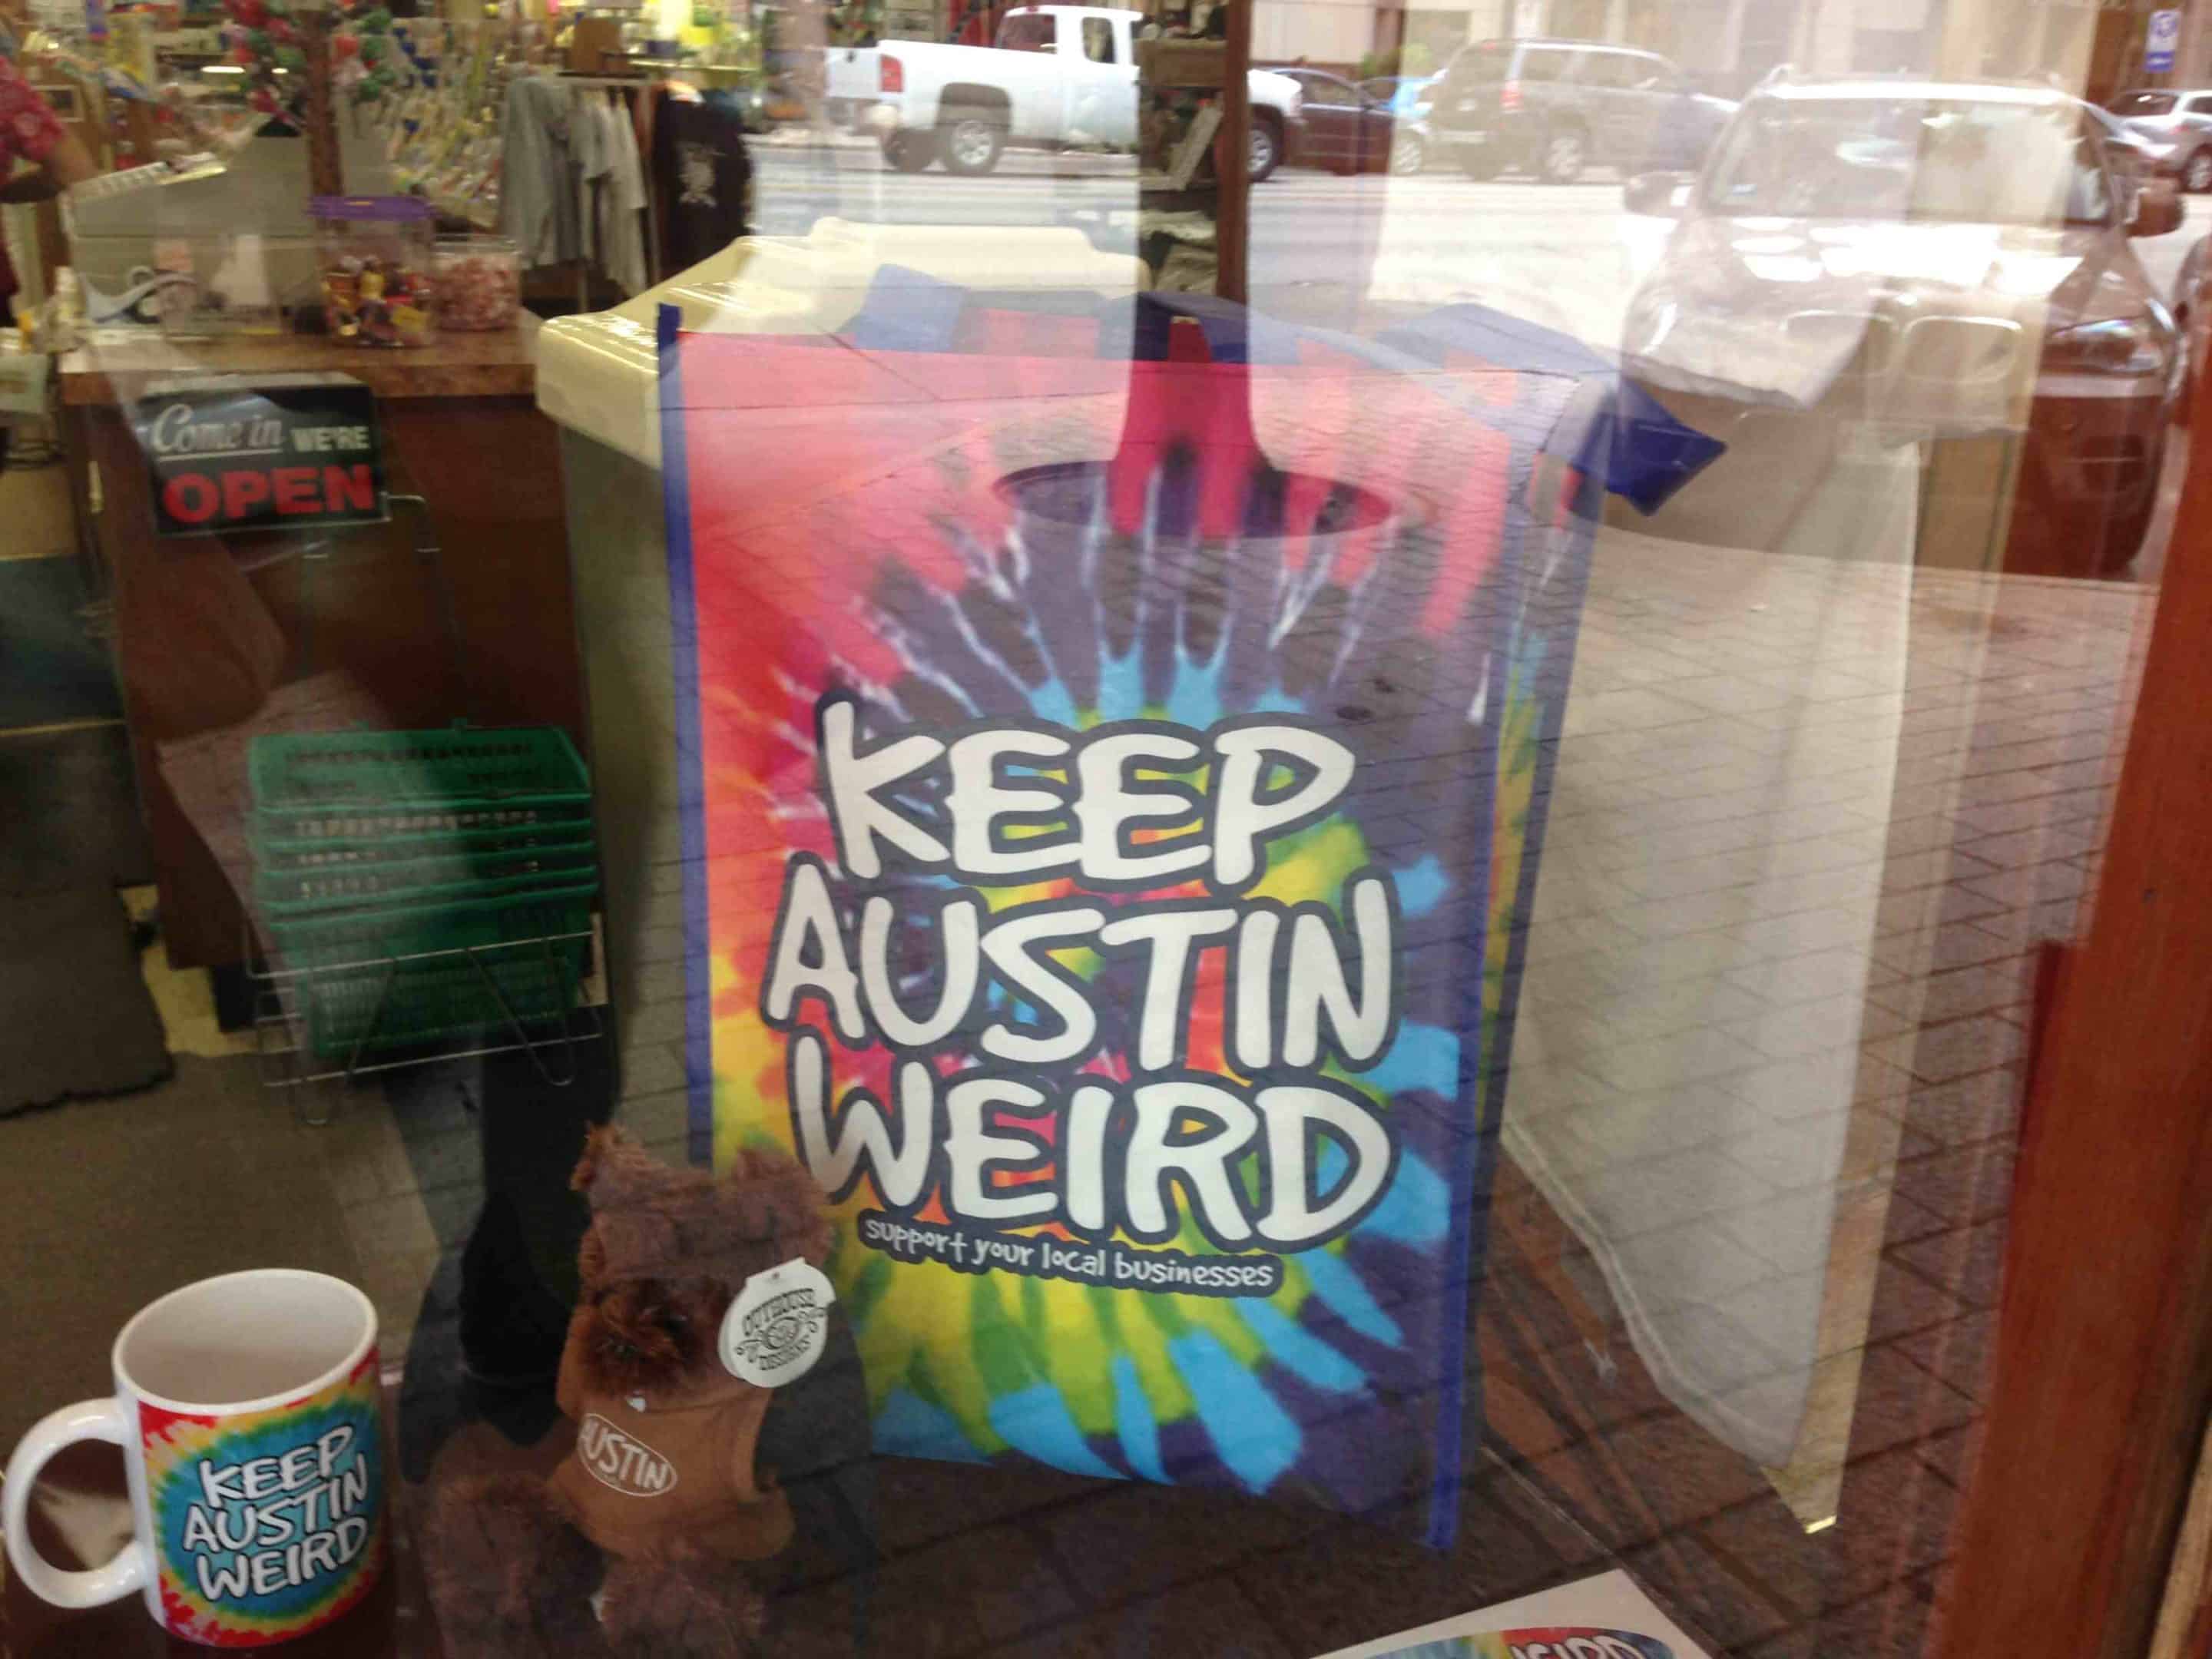 Keep Austin Weird merchandise in a store window.